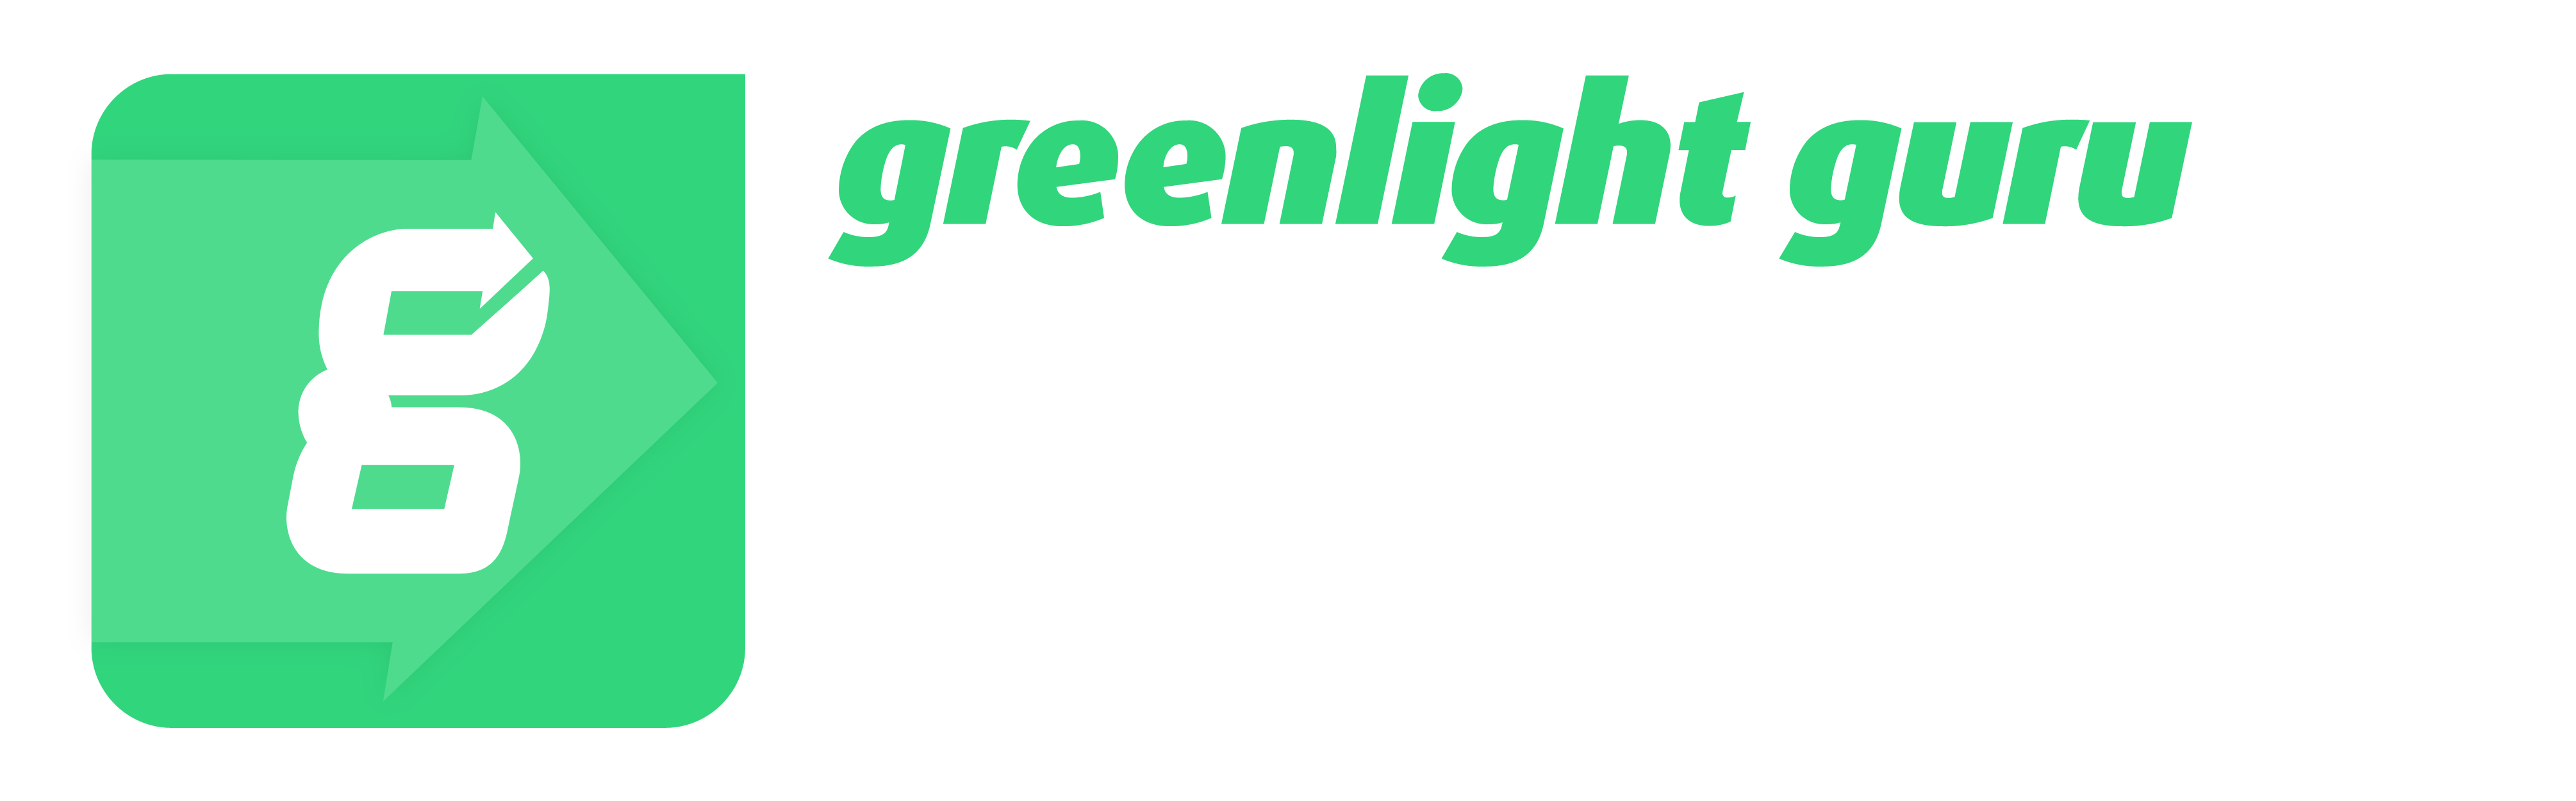 homepage greenlight guru clinical logo